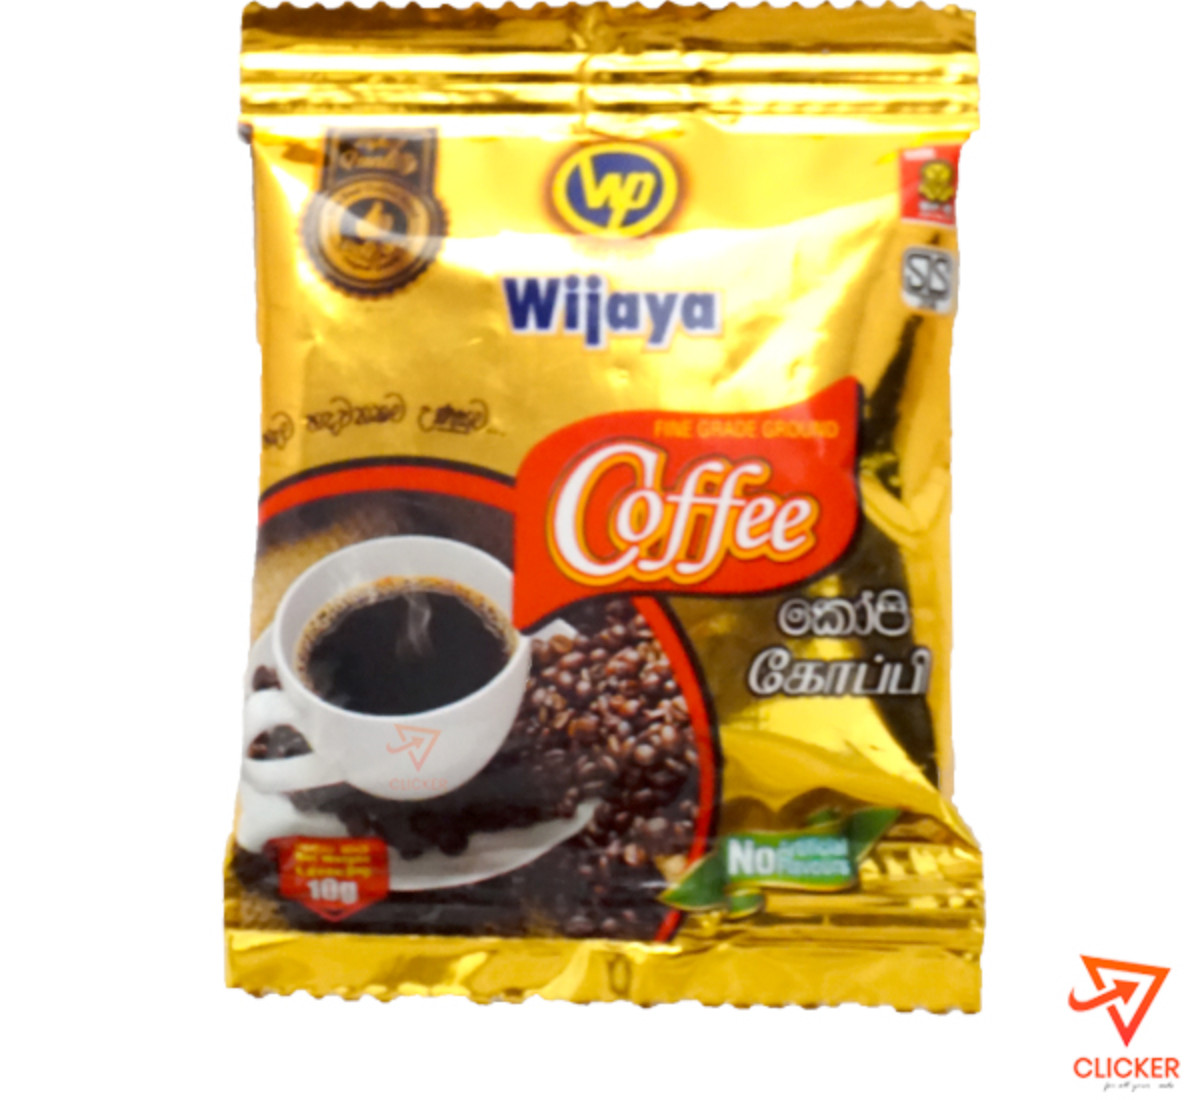 Clicker product 10g WIJAYA  coffee 987